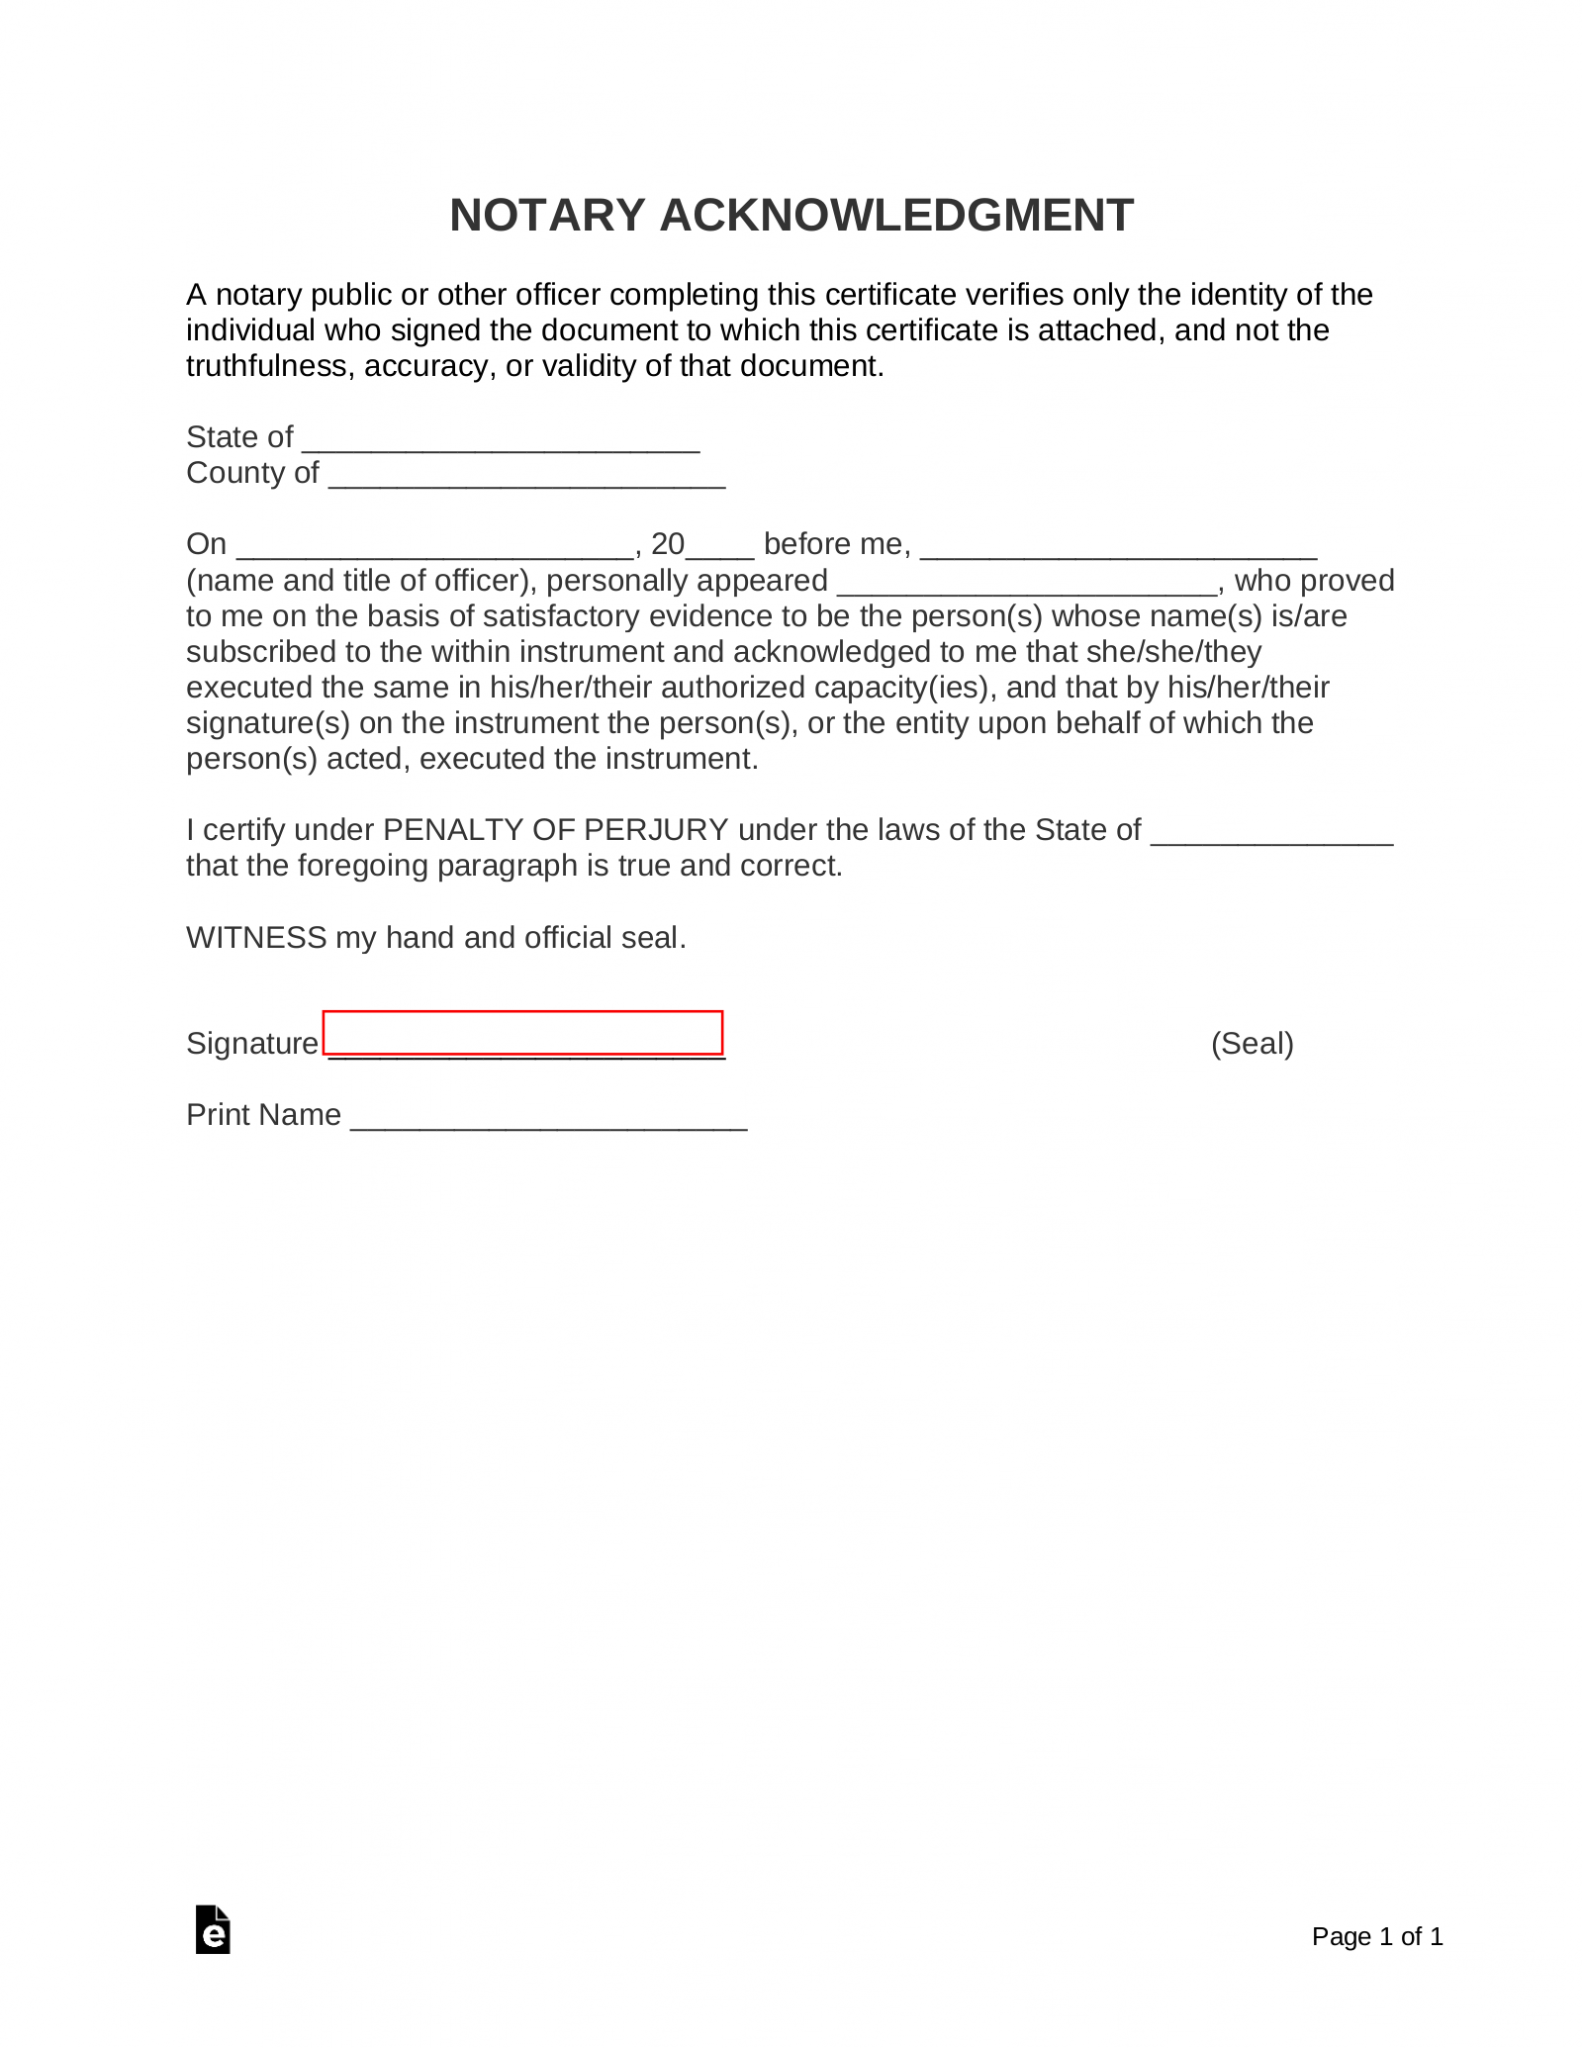 notary affidavit format for name correction